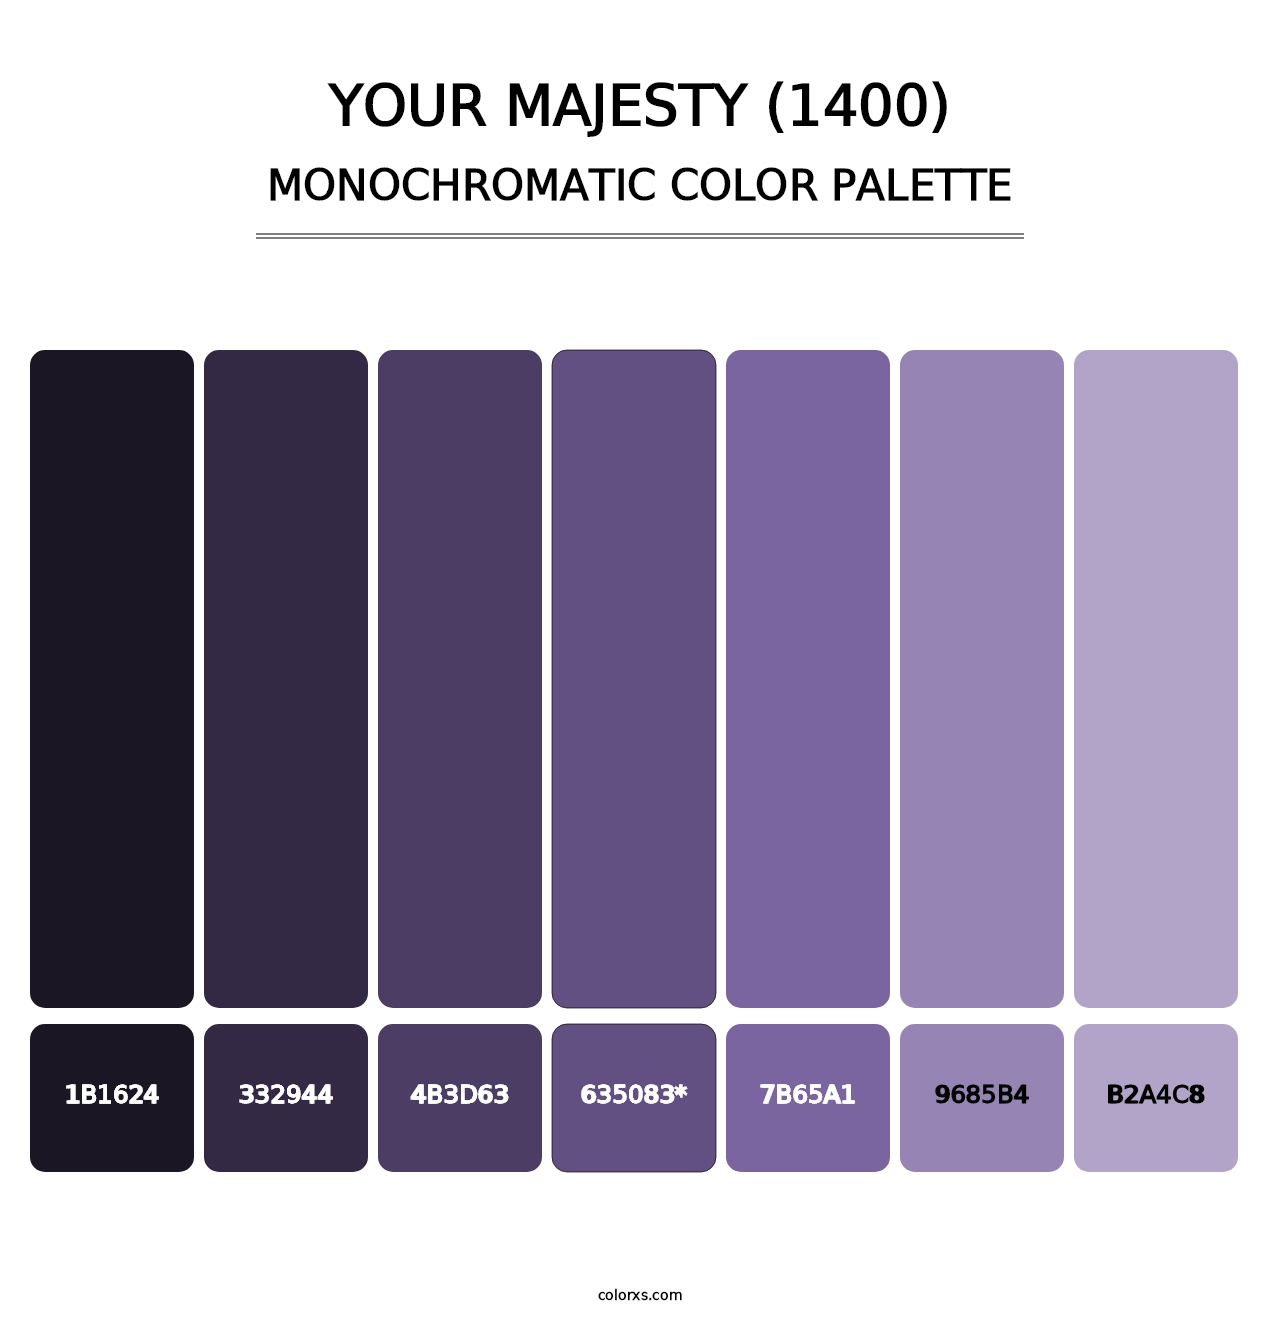 Your Majesty (1400) - Monochromatic Color Palette